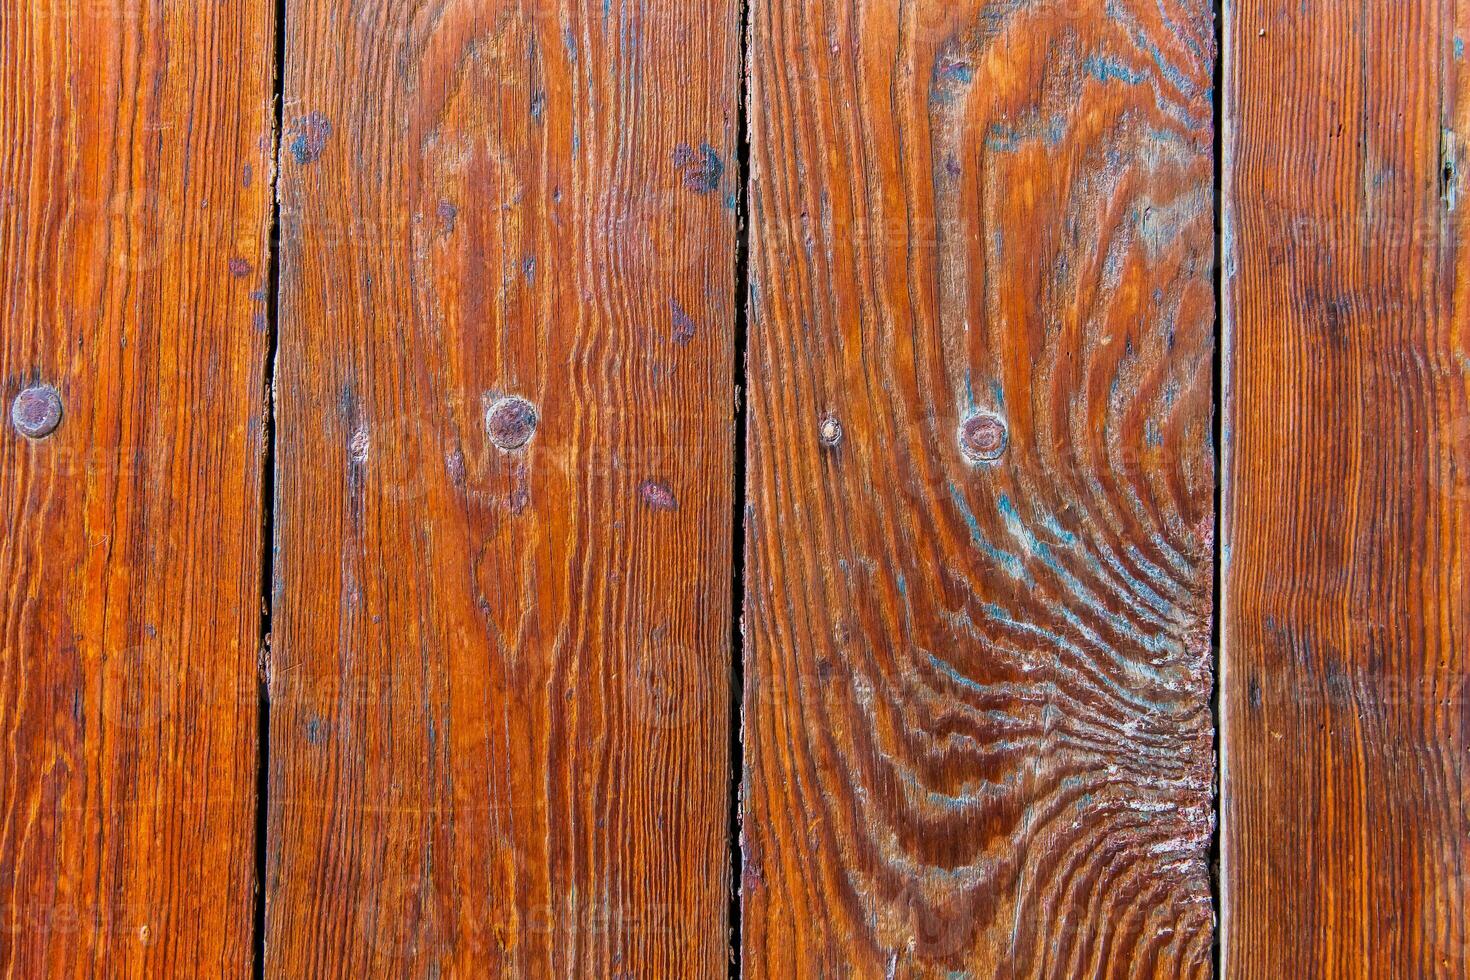 Vintage wood background texture - Design element photo